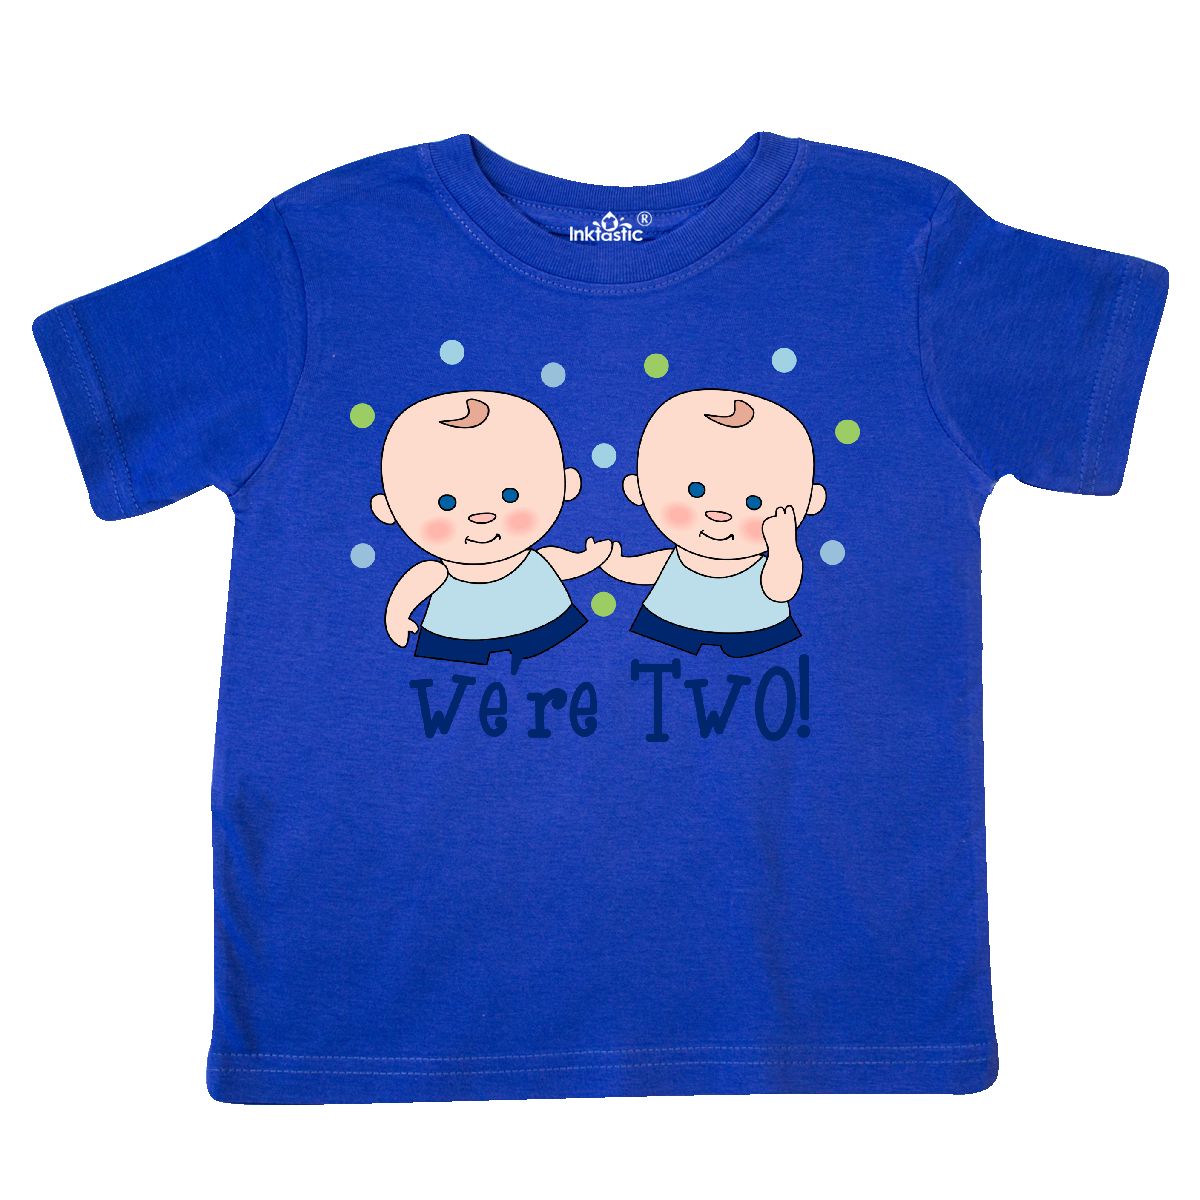 Edward Beck 6-24 Month Baby T-Shirt Sarah & Duck Logo Fashion Classic RoyalBlue 